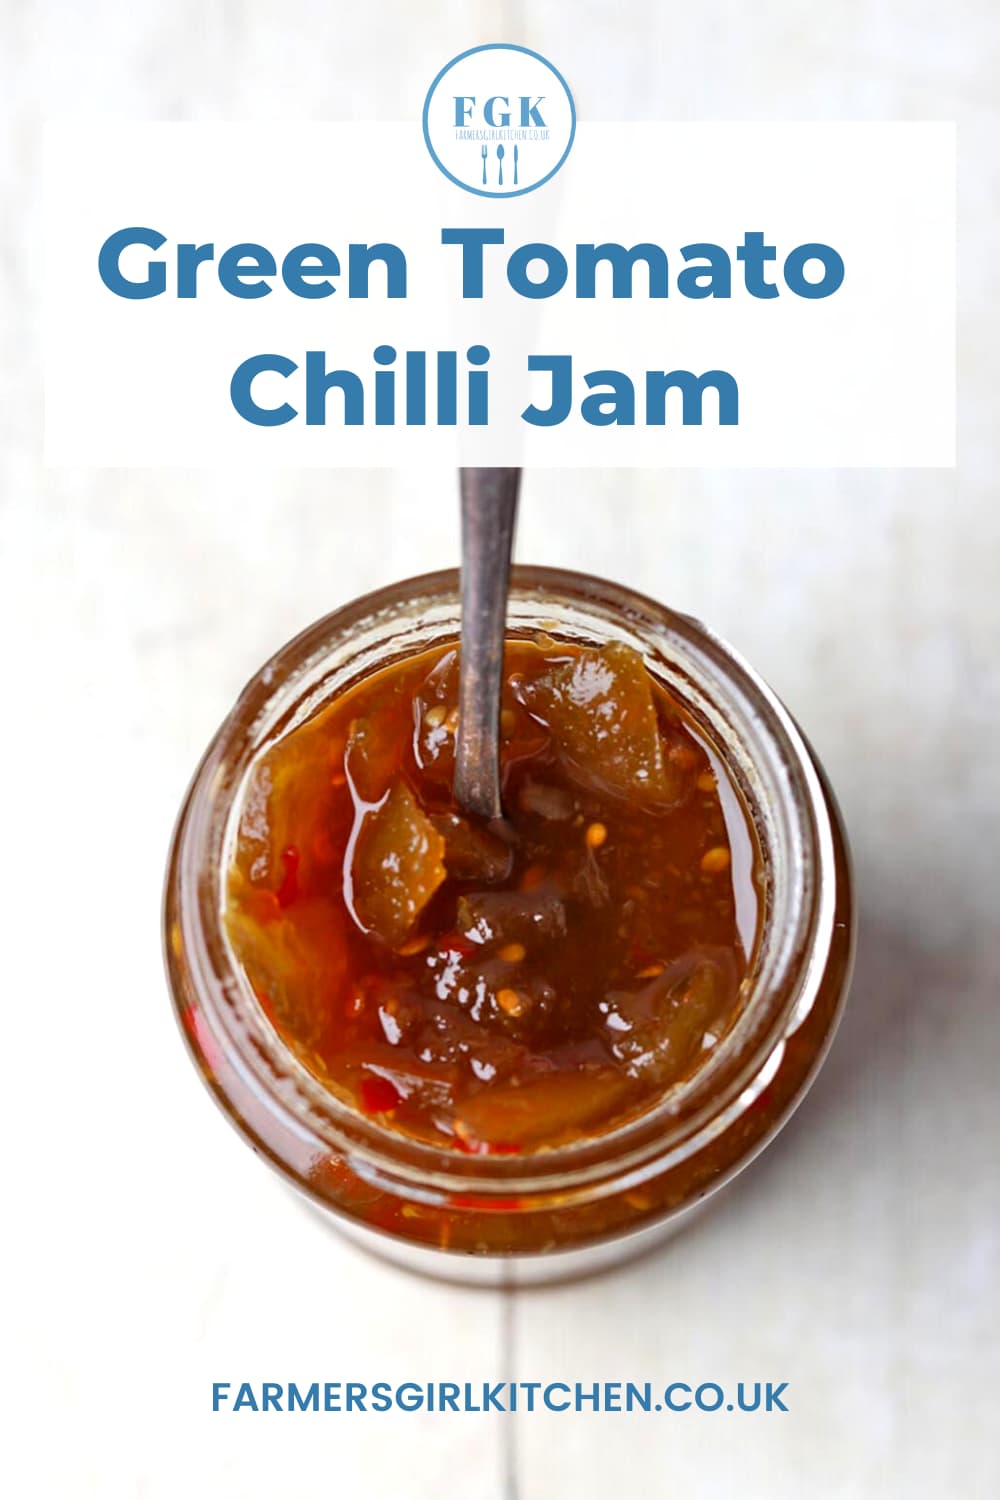 Green Tomato Chilli Jam jar and spoon